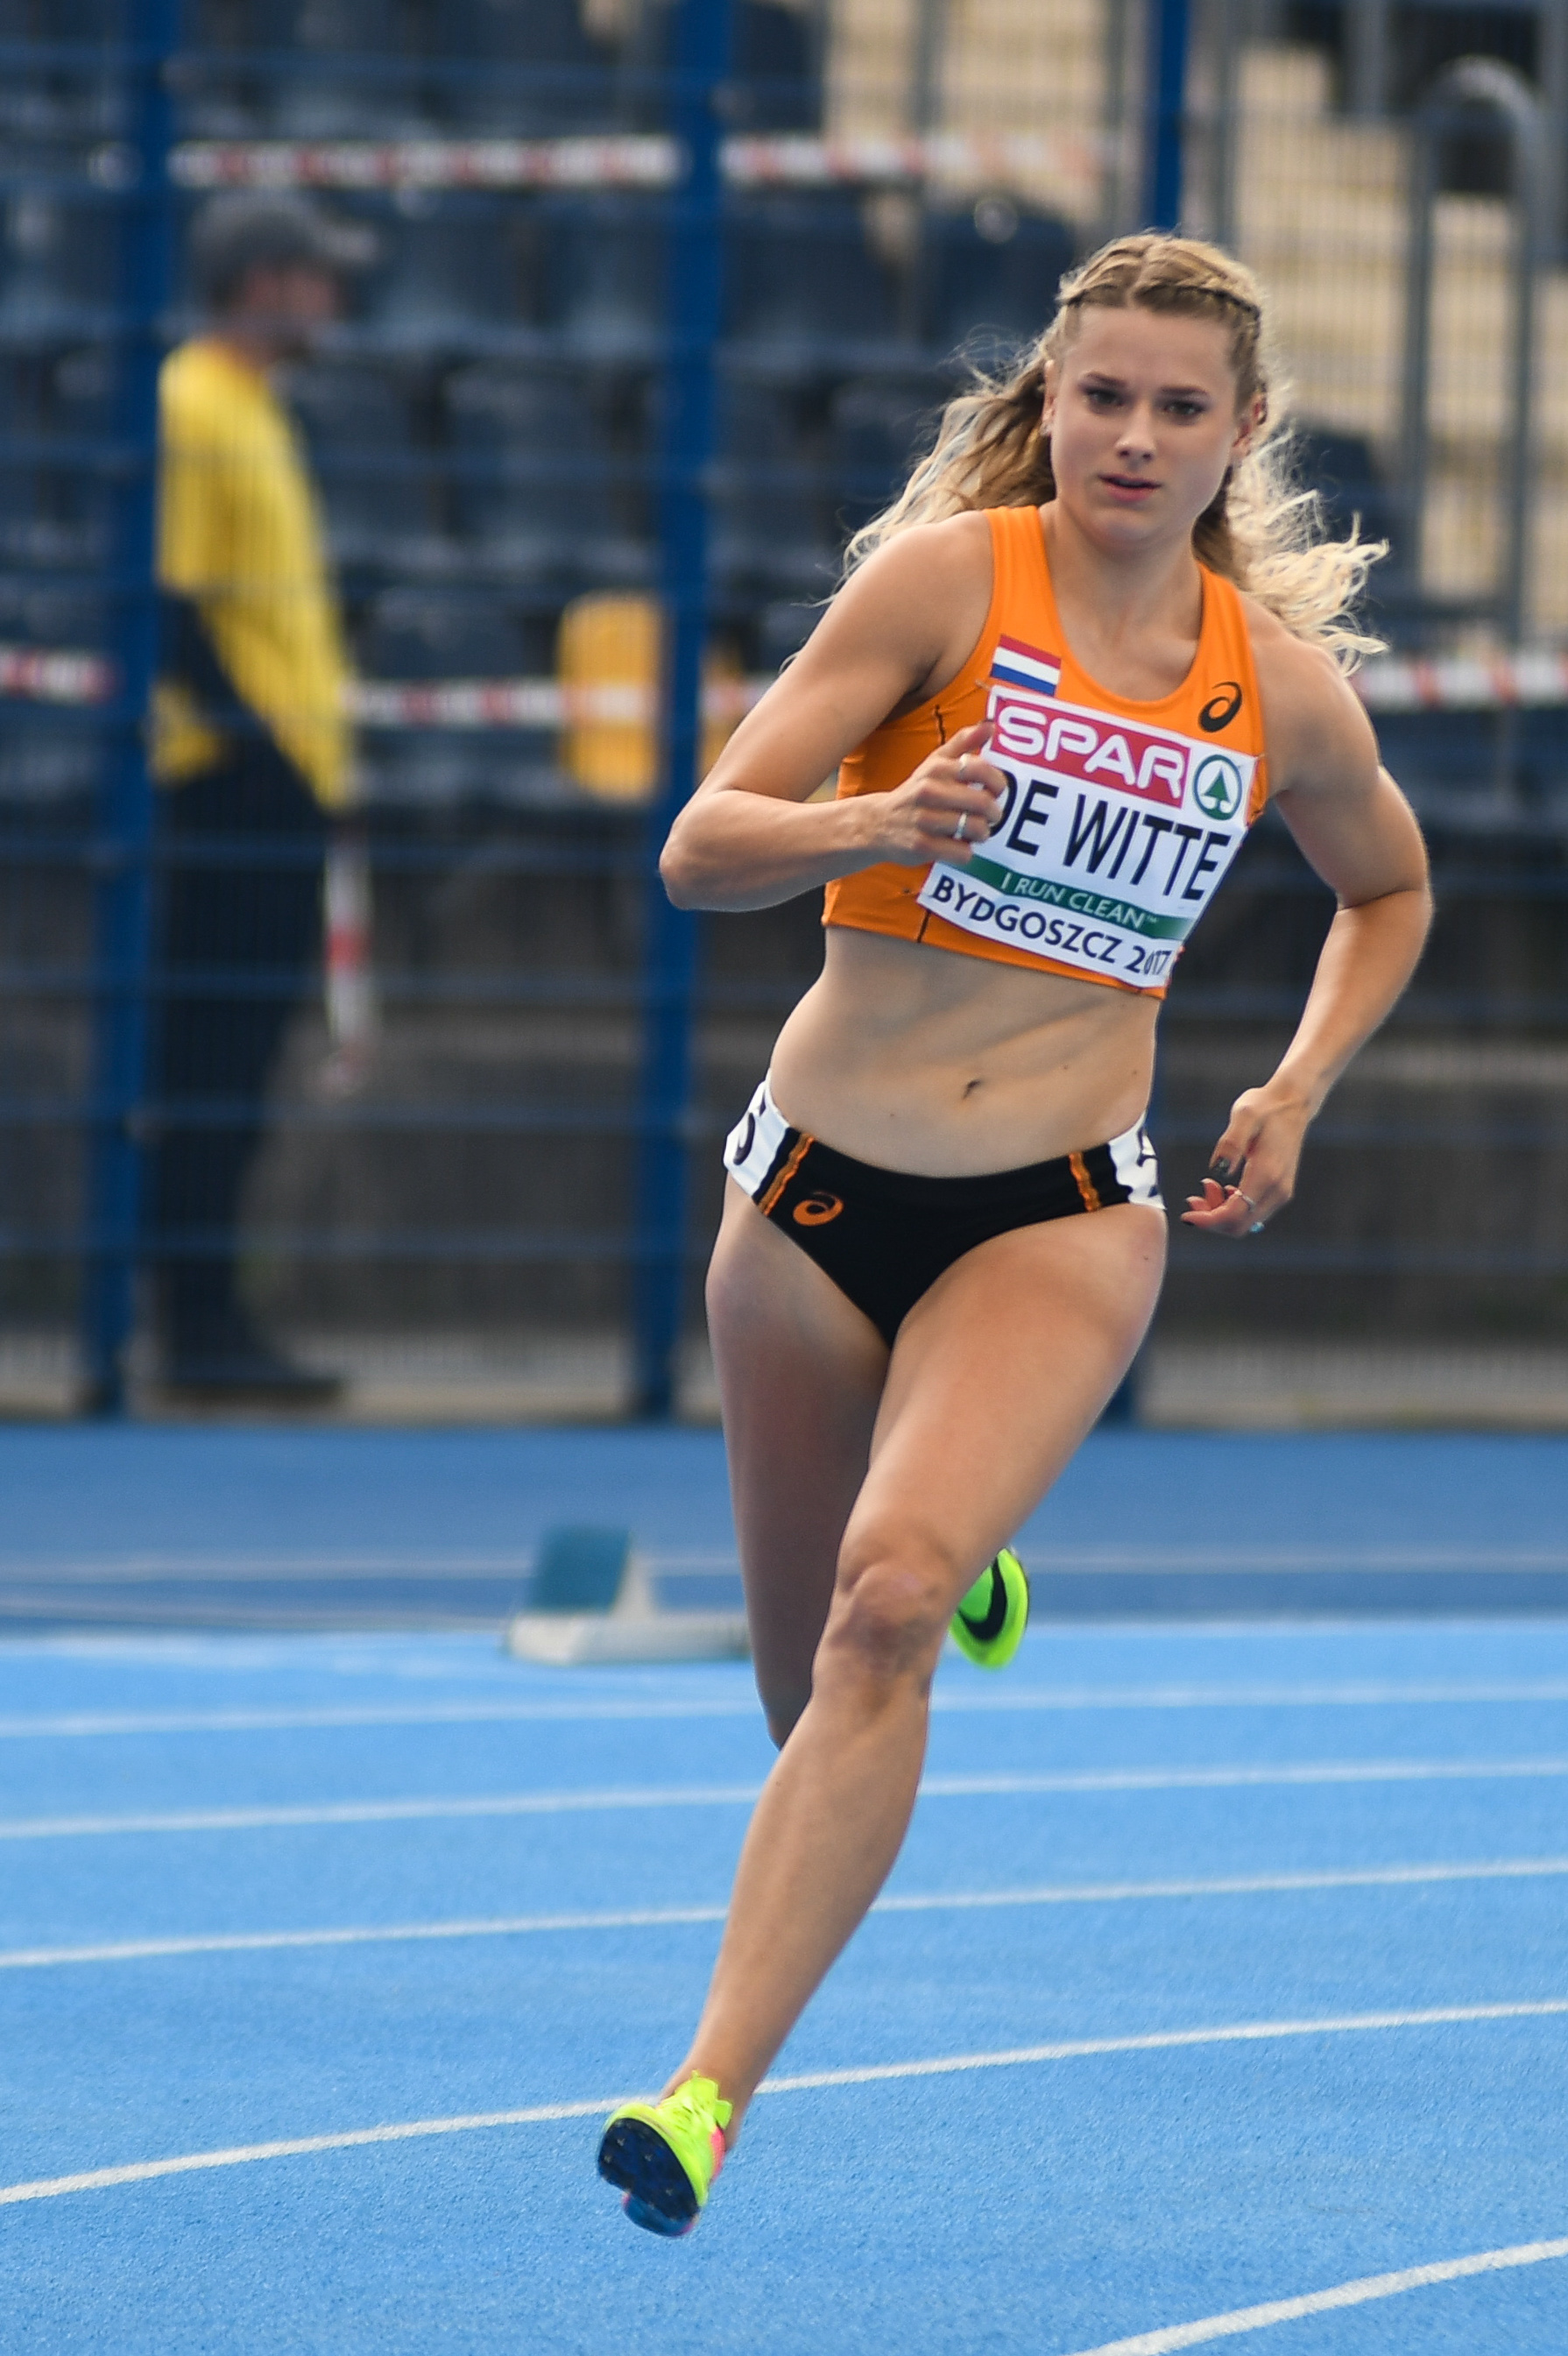 Laura De Witte 400m Bydgoszcz 2017